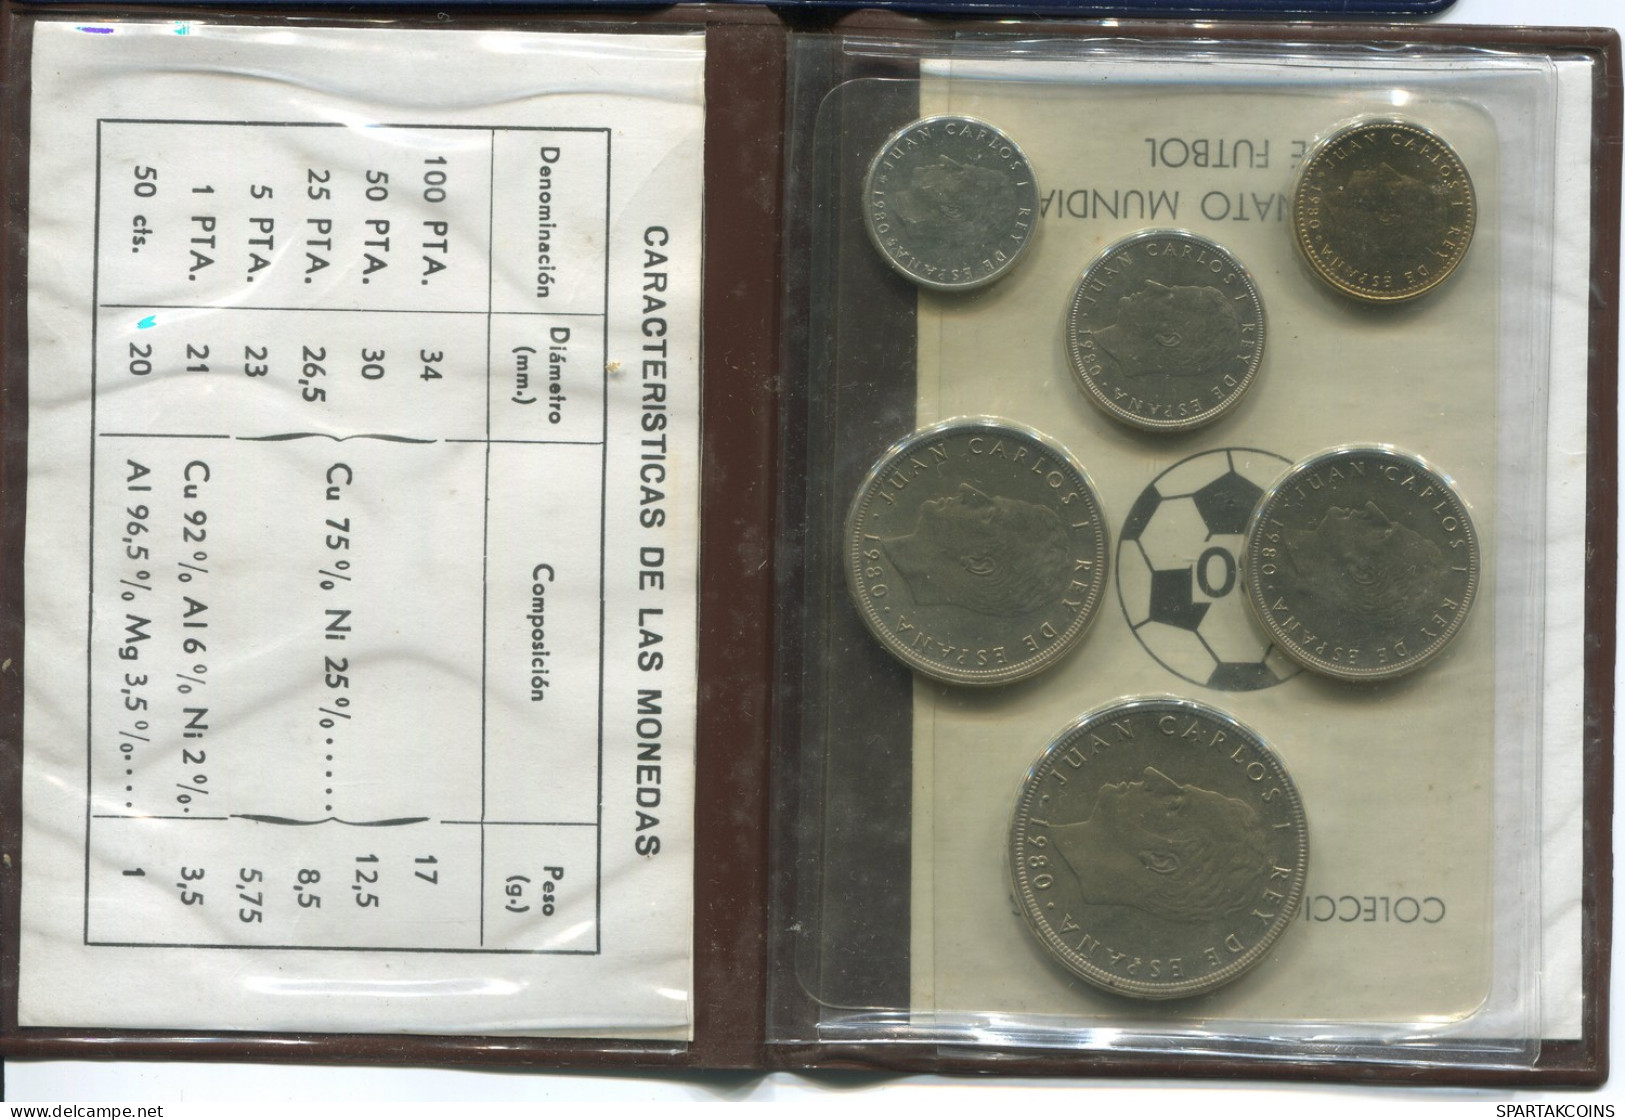 SPAIN 1980*80 Coin SET 50 MUNDIAL*82 UNC #SET1261.4.U - Ongebruikte Sets & Proefsets